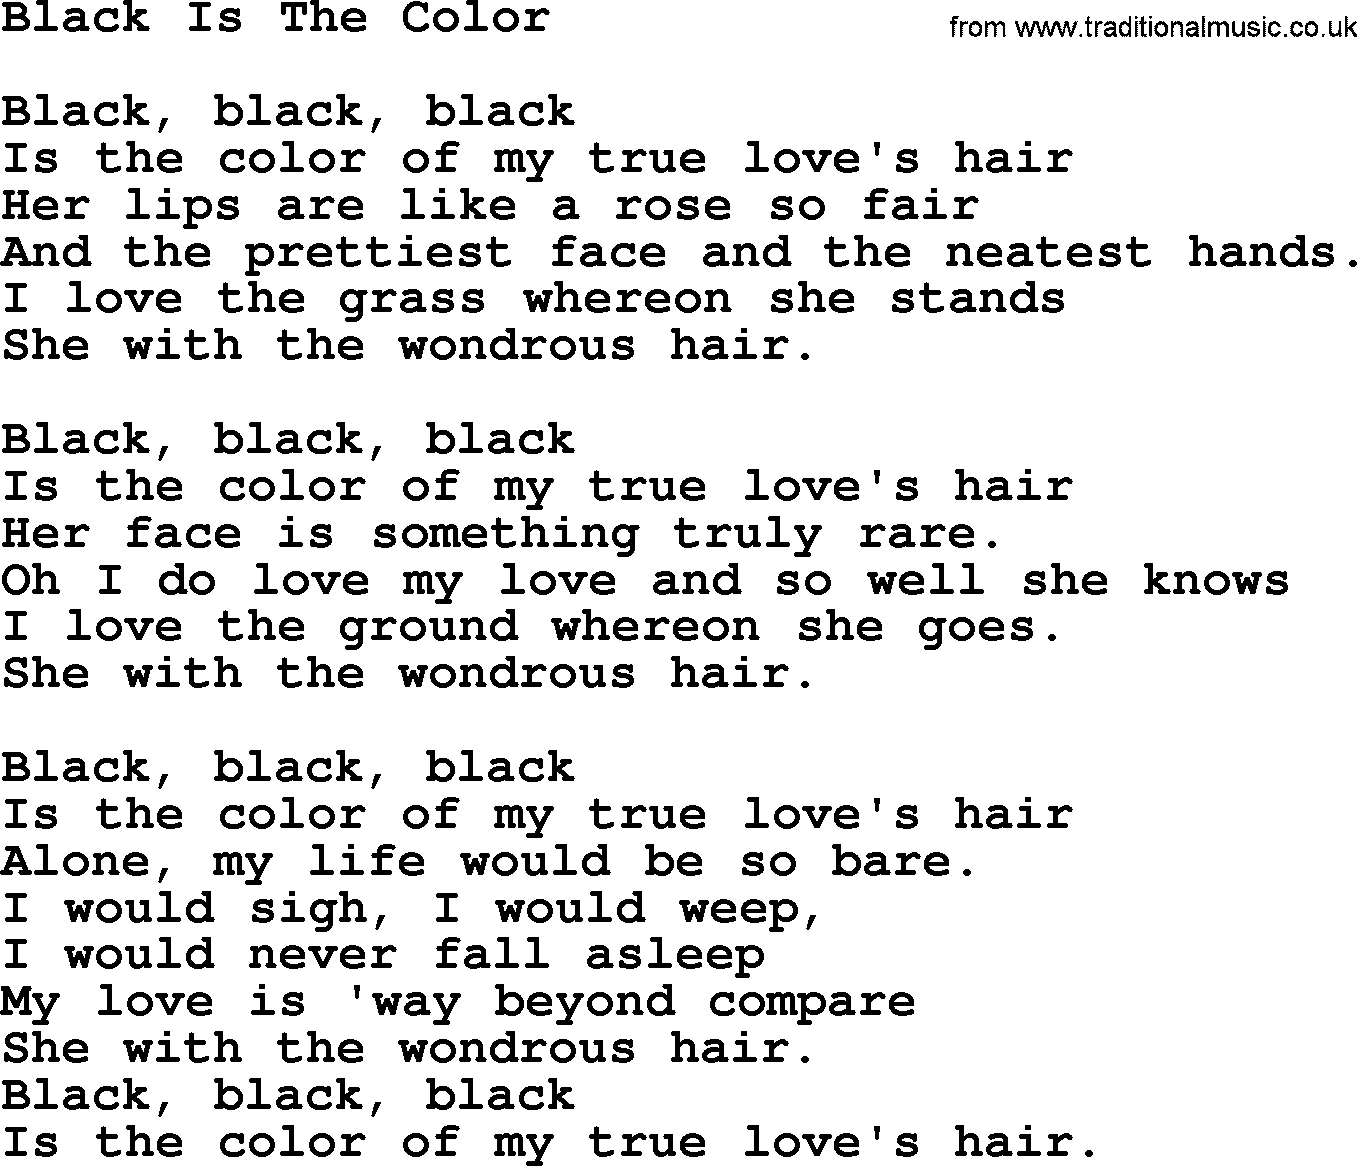 Joan Baez song Black Is The Color, lyrics